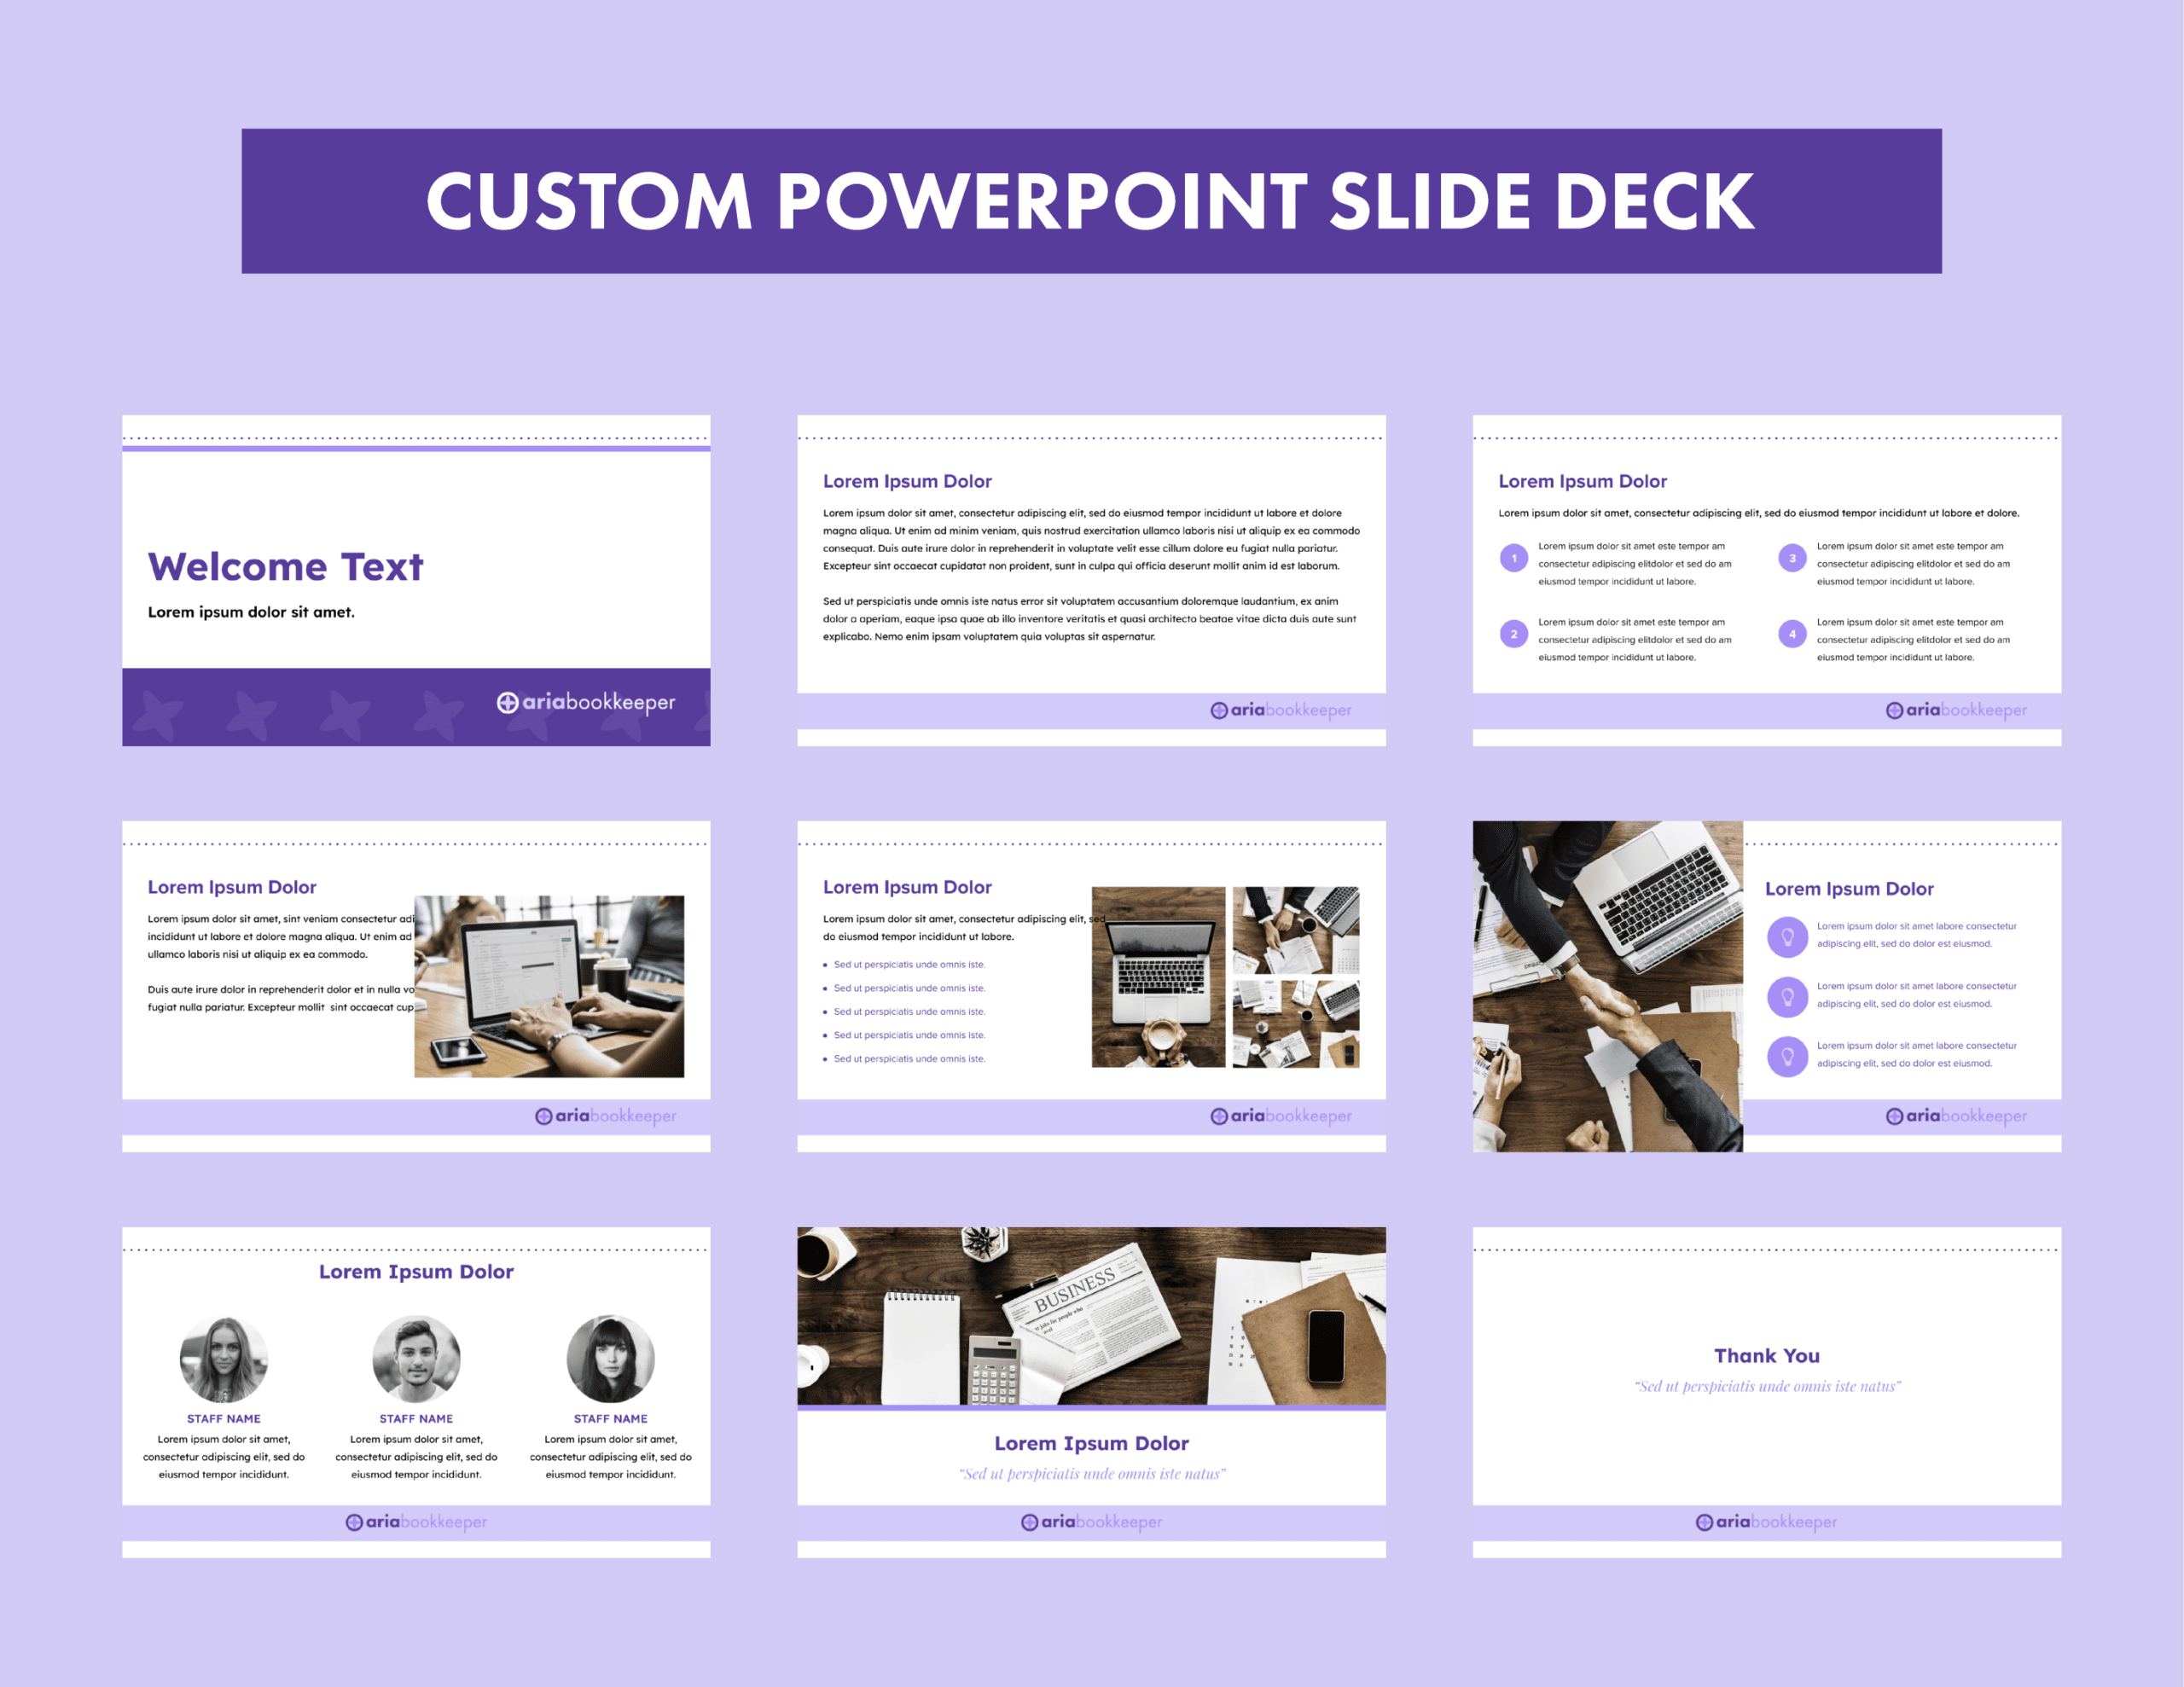 05Aria_Showcase_Custom PowerPoint Slide Deck